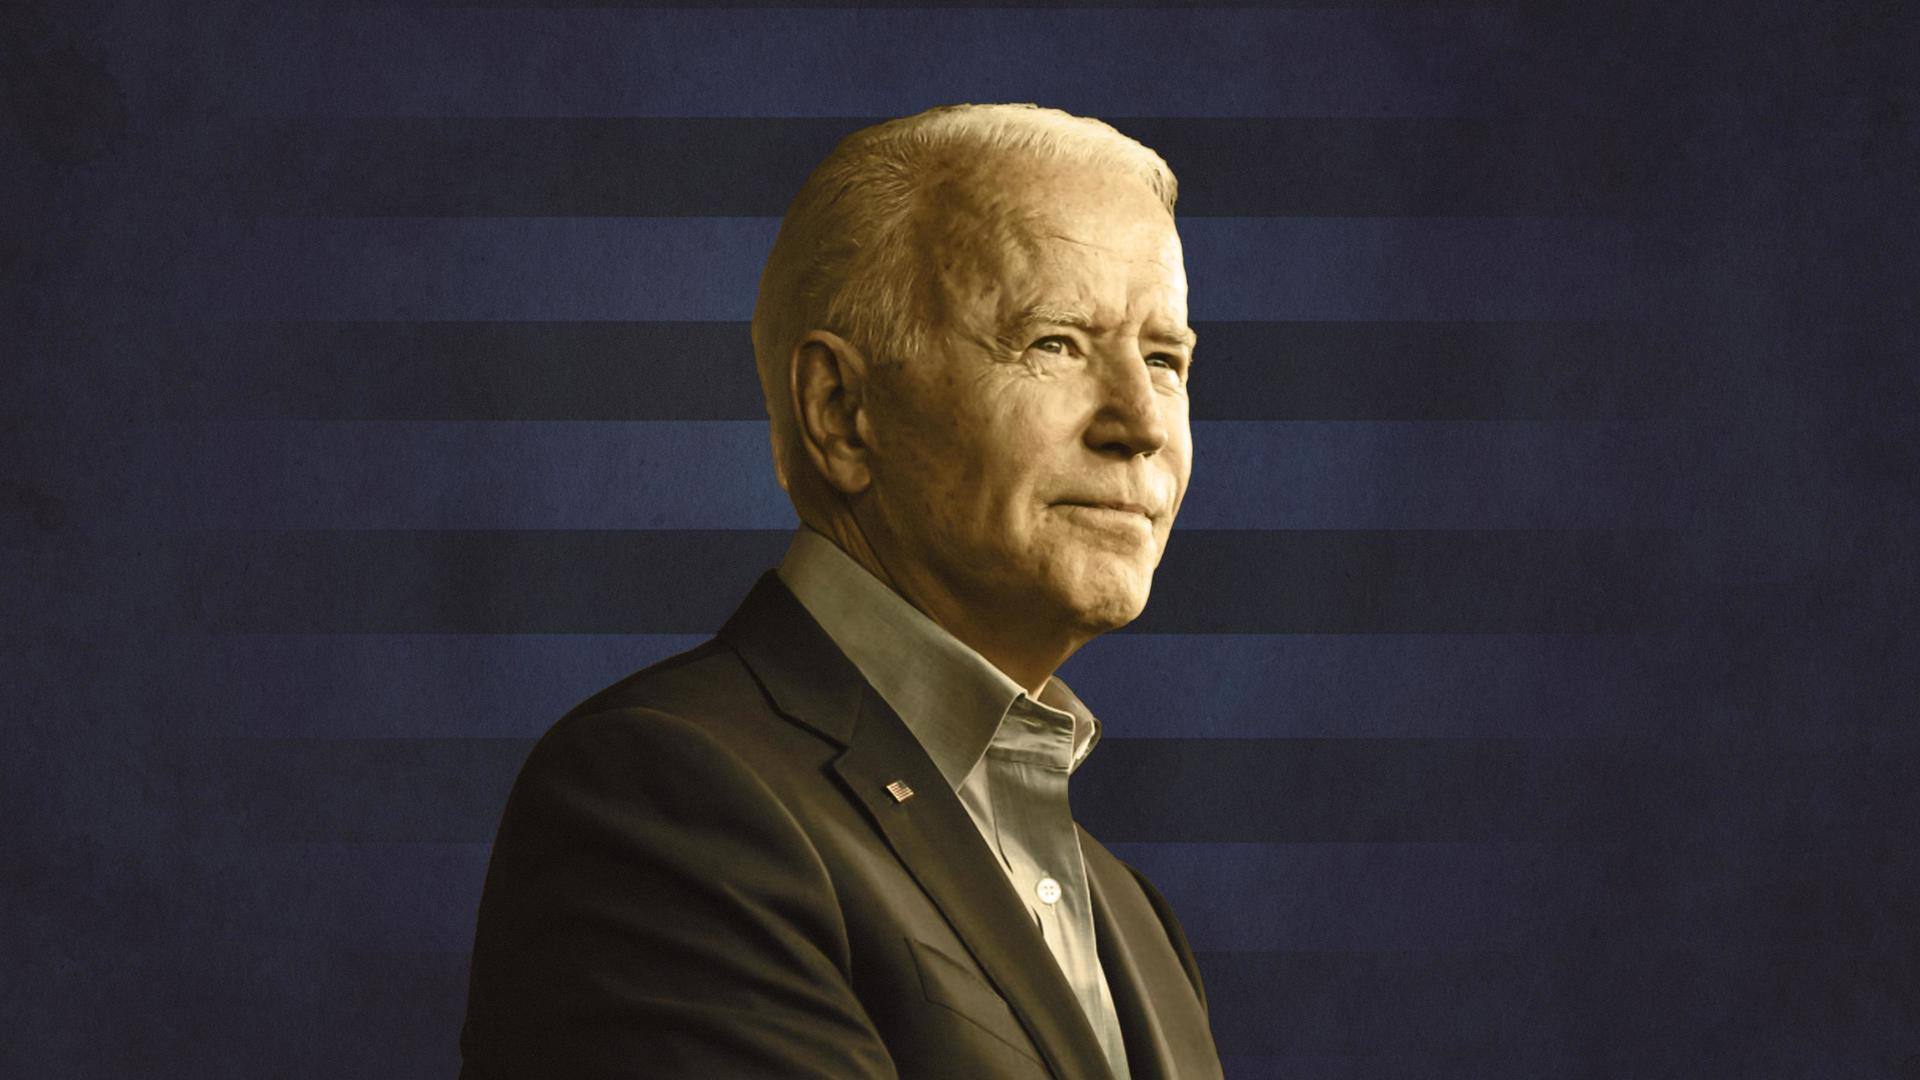 US President Joe Biden may face impeachment probe